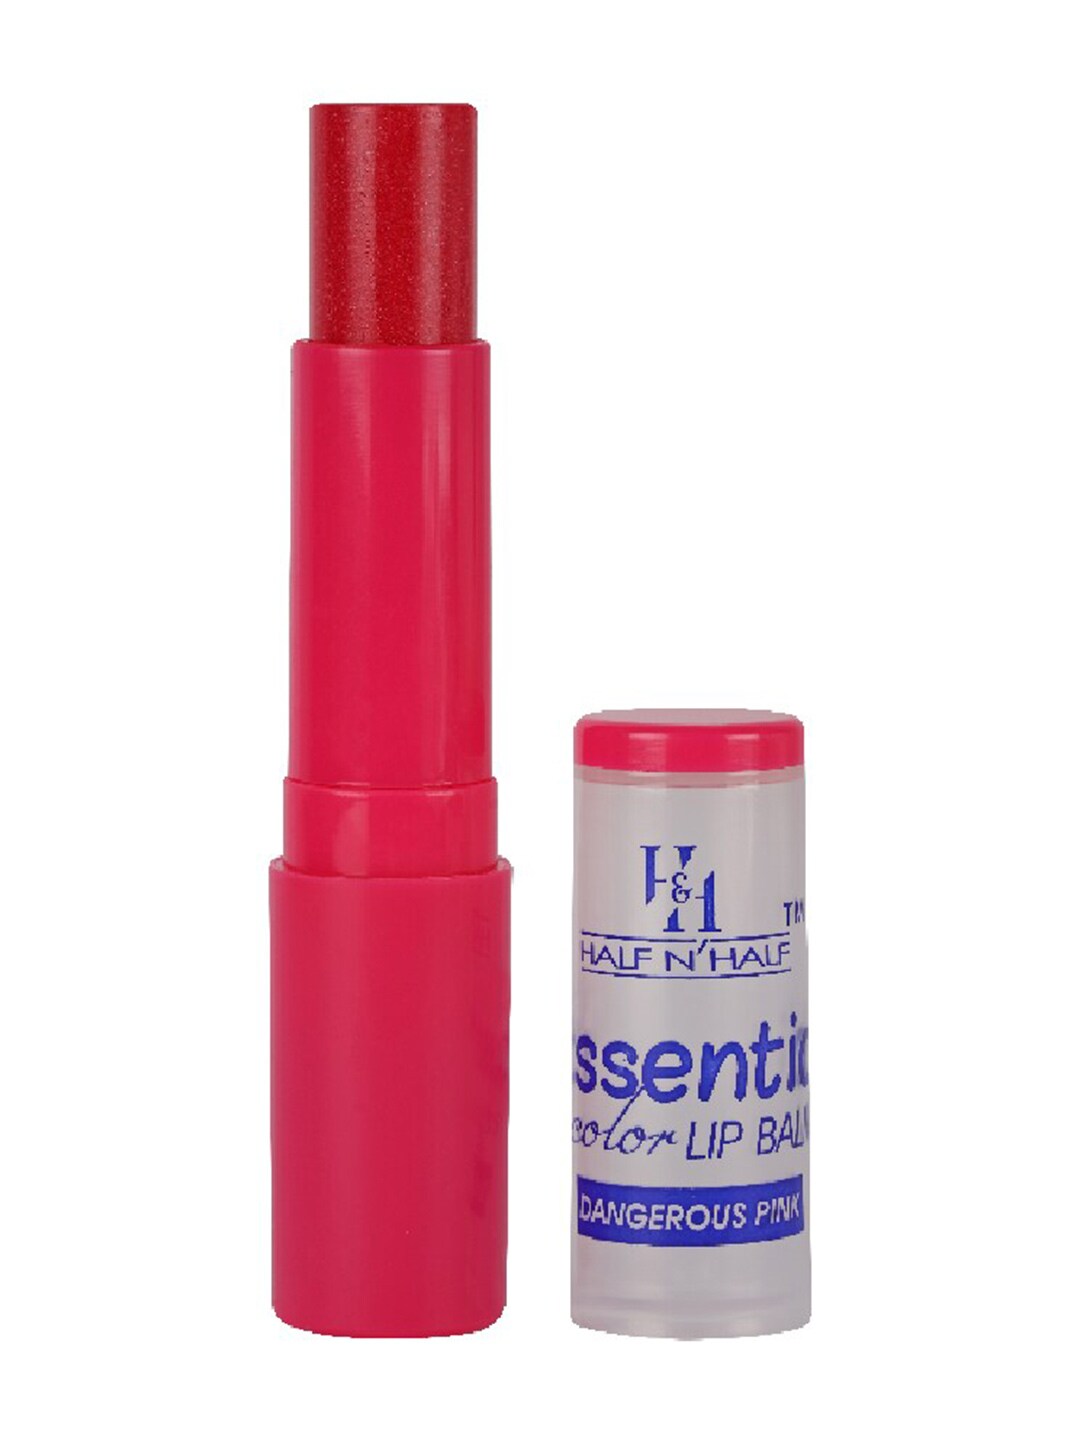 Half N Half Pack Of 3 Dangerous Pink Essential Color Lip Balm, 3.5Gm Price in India